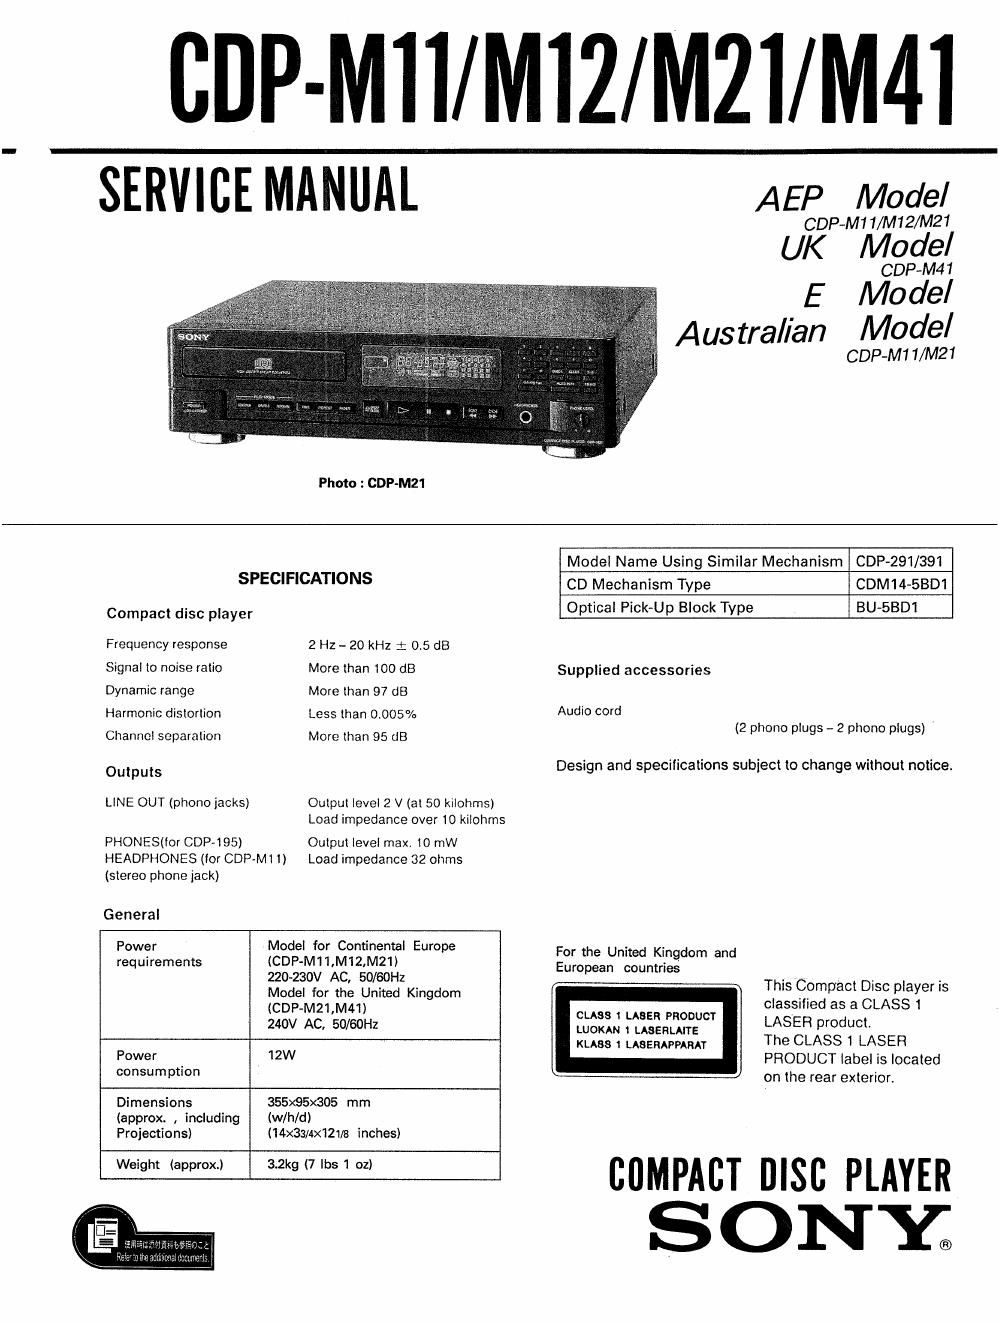 sony cdp m 21 service manual